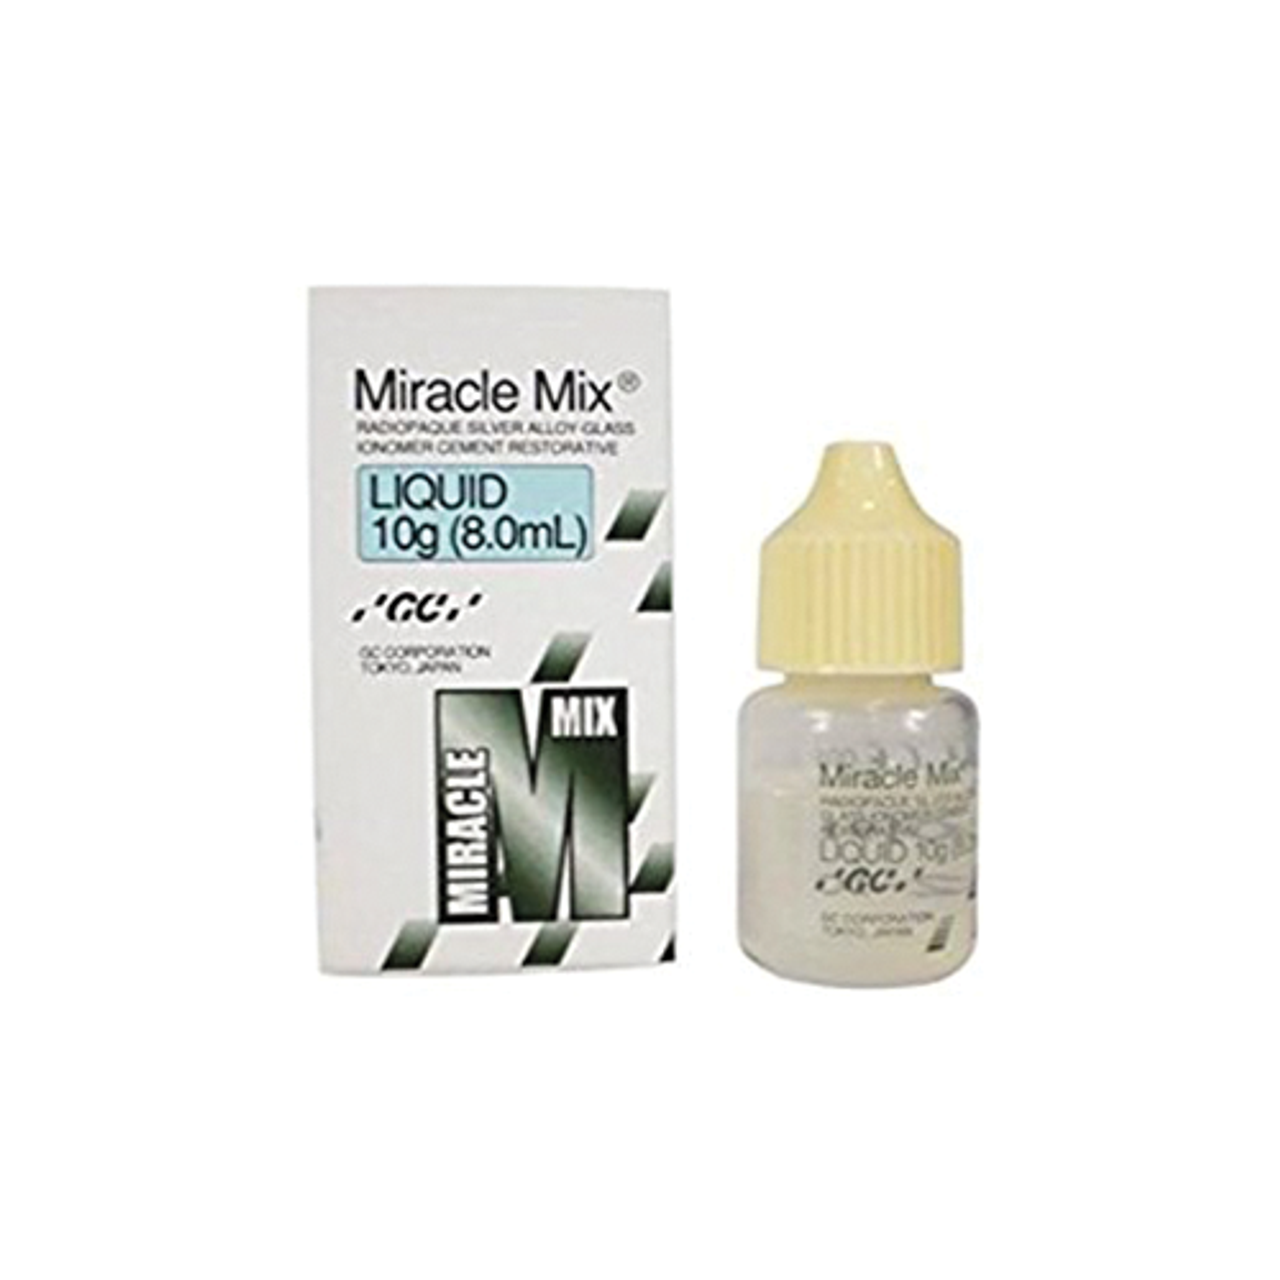 Miracle Mix Liquid